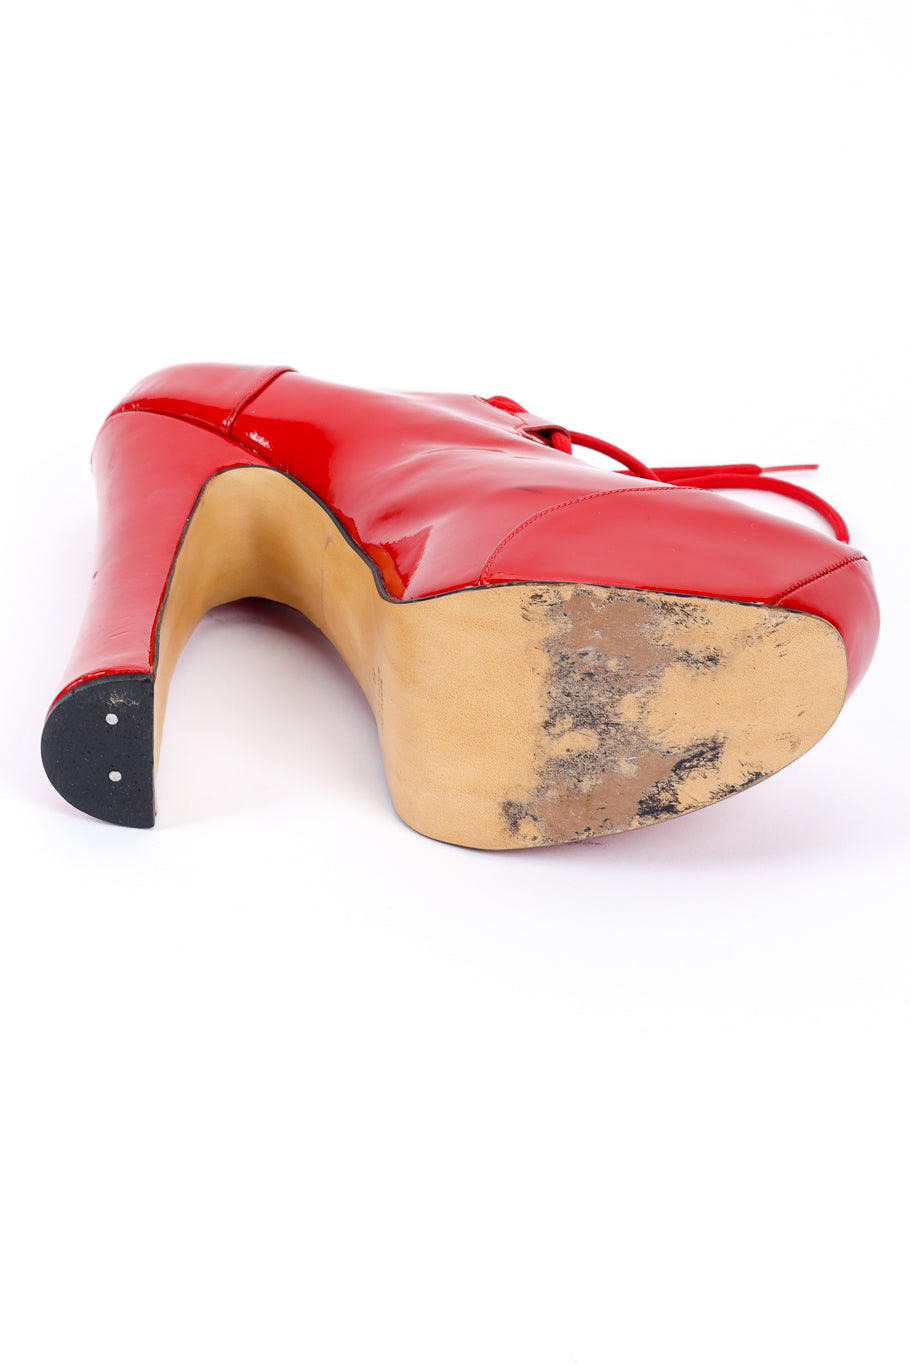 Vintage Vivienne Westwood Patent Leather Elevated Ghillie Platforms left shoe outsole @recessla